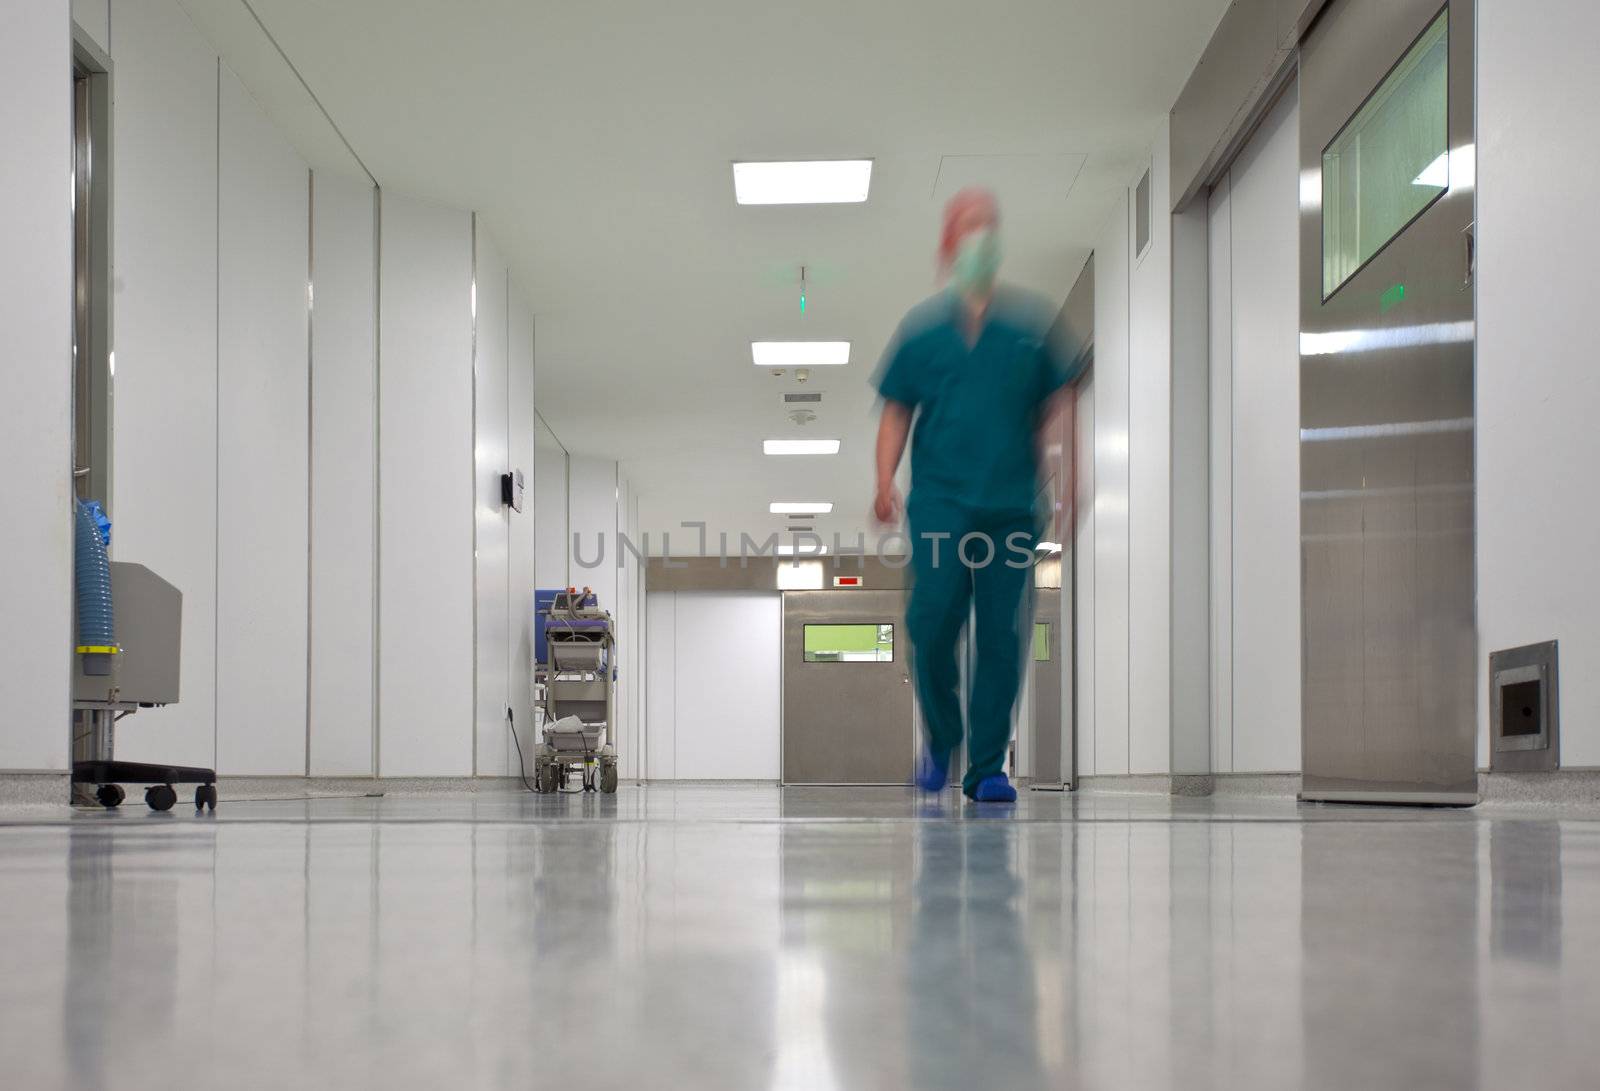 Blurred figure in hospital surgery corridor by vilevi